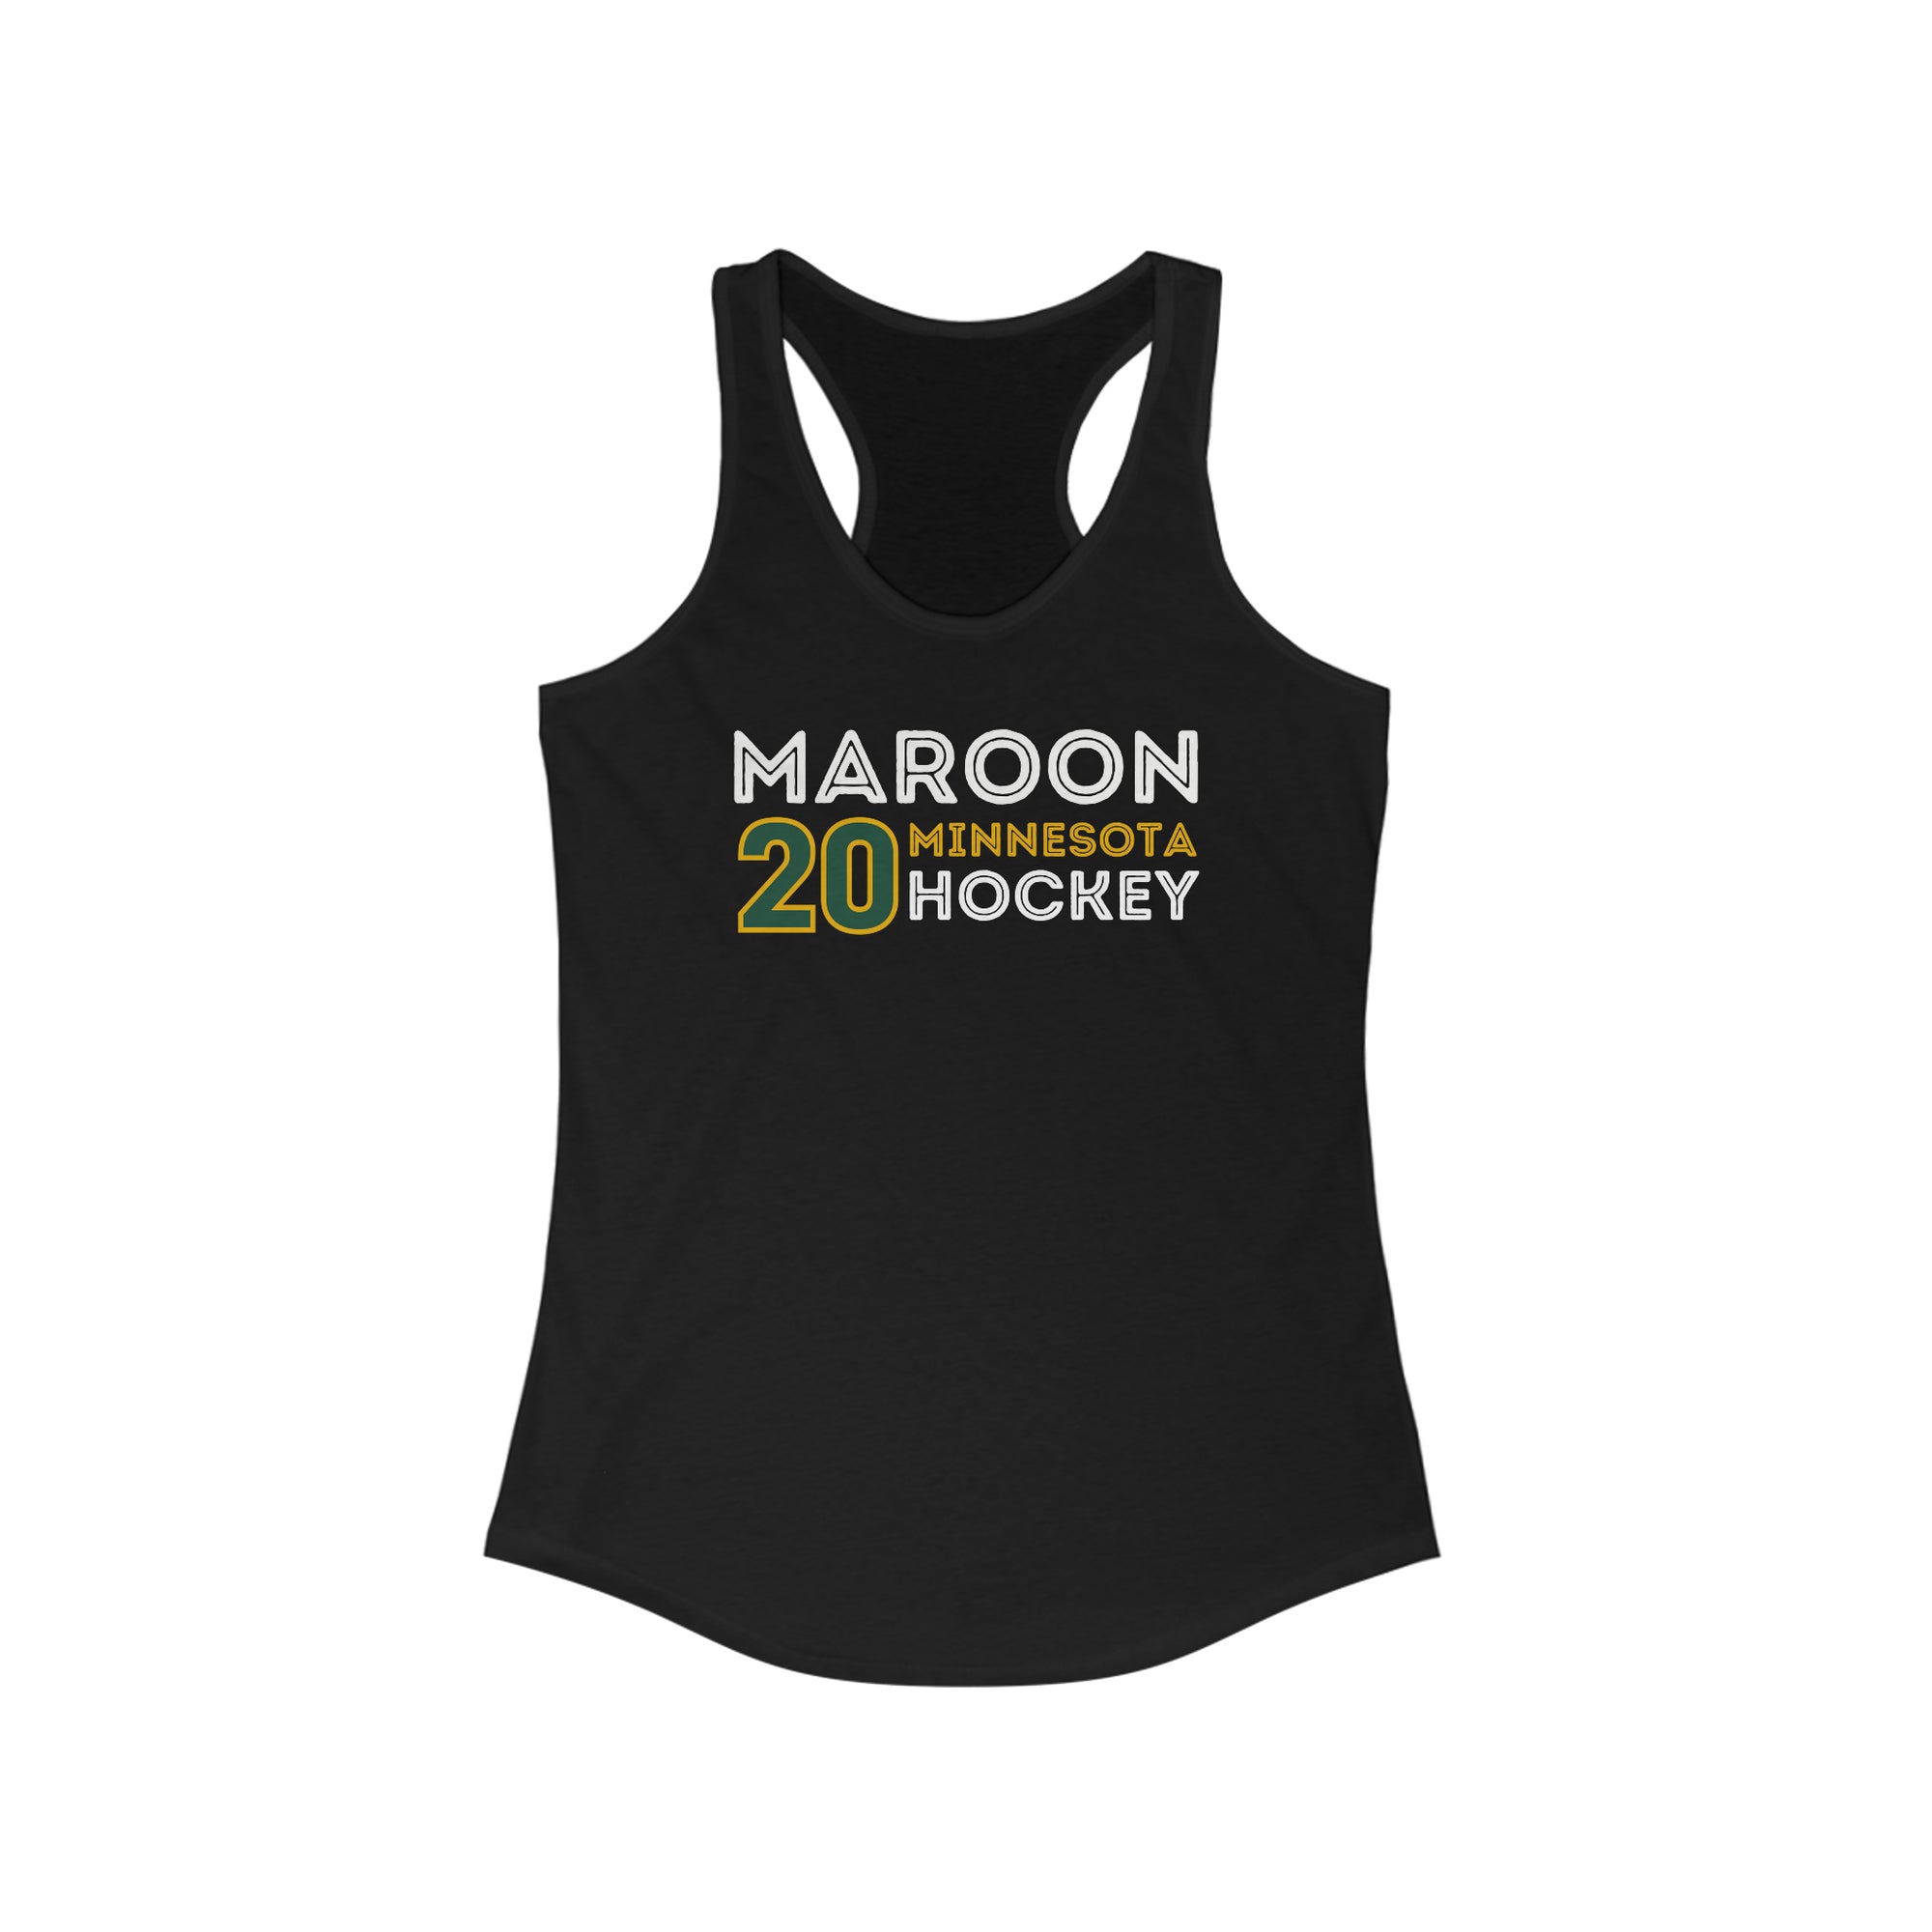 Maroon 20 Minnesota Hockey Grafitti Wall Design Women's Ideal Racerback Tank Top